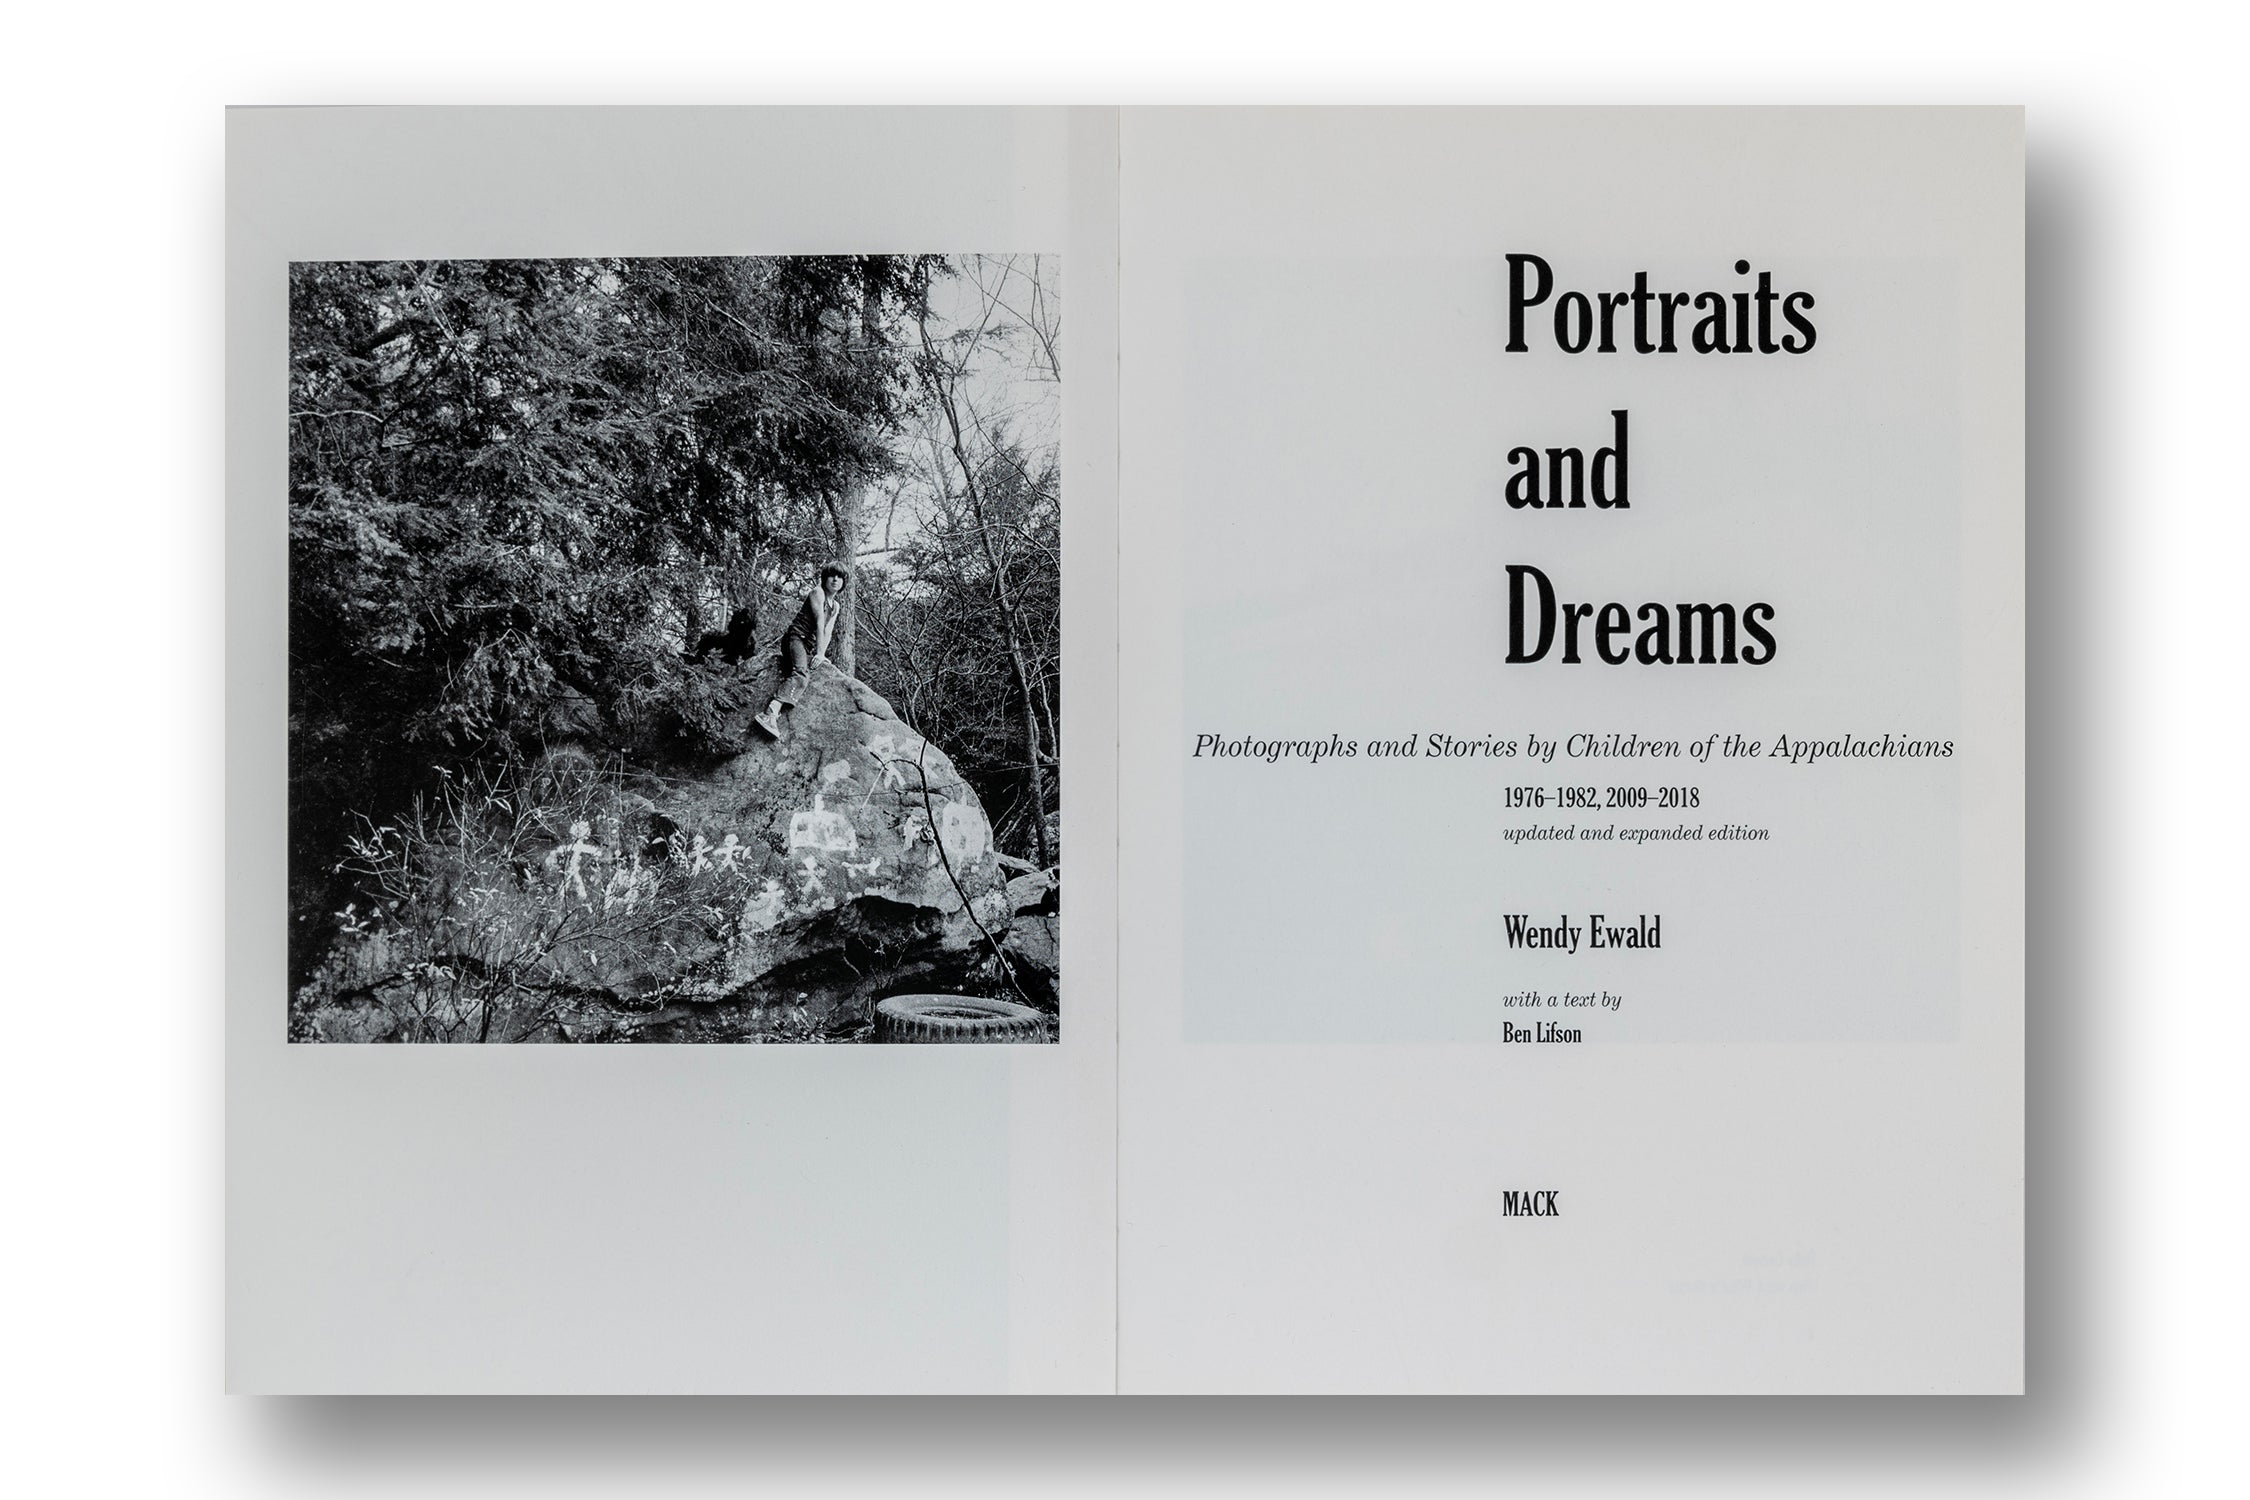 Wendy Ewald, Portraits and Dreams